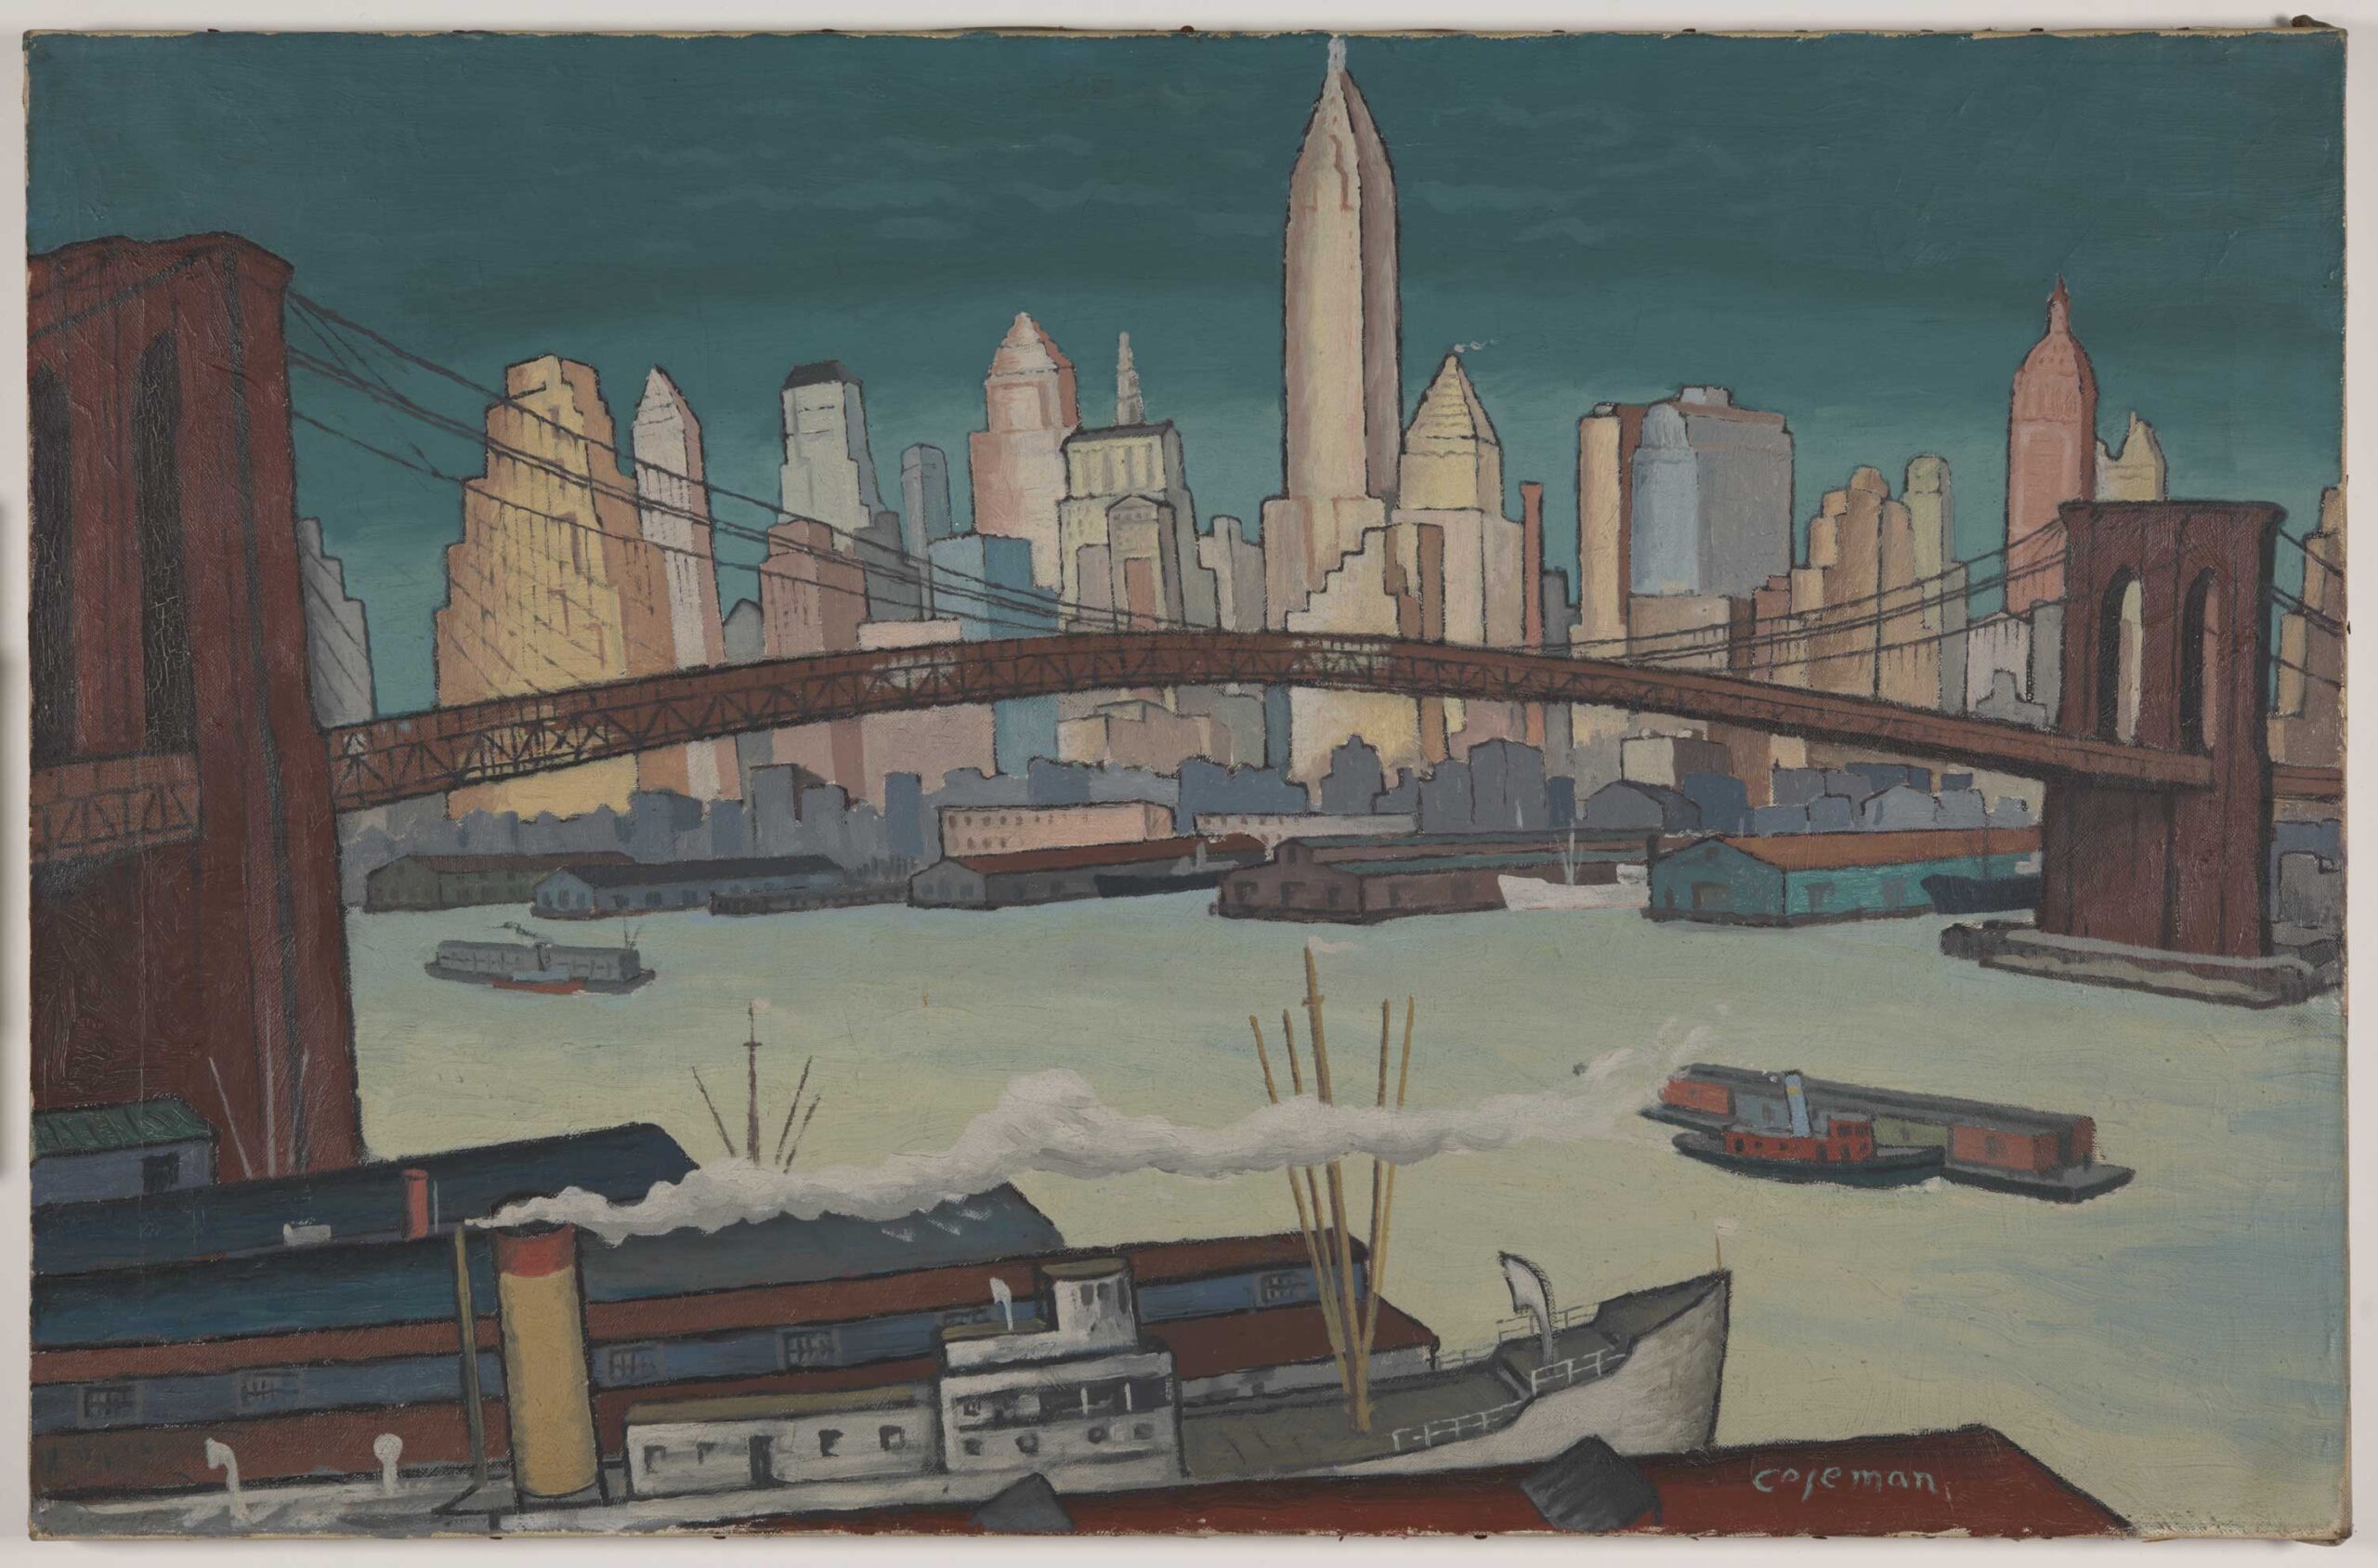 American art - painting of the Brooklyn bridge